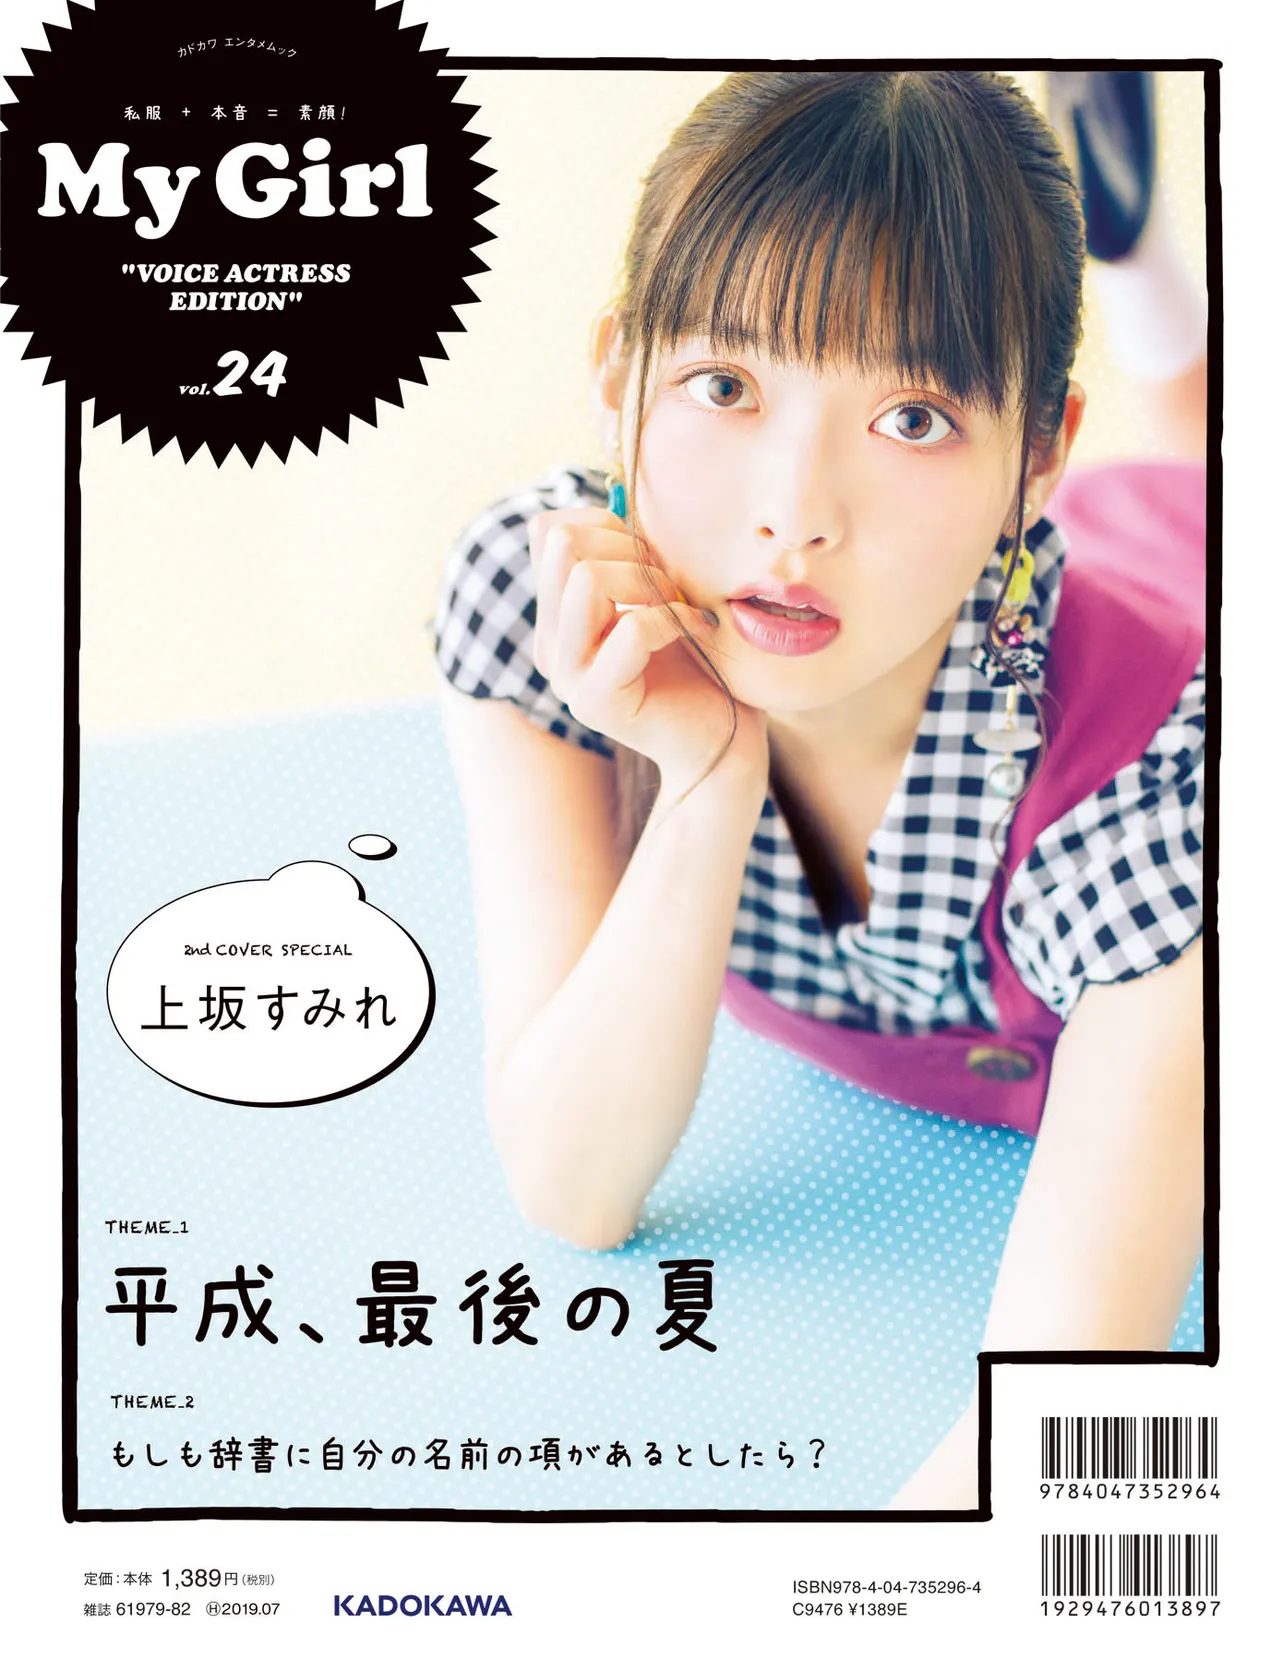 【My Girl vol.24】上坂すみれ / 2nd Cover